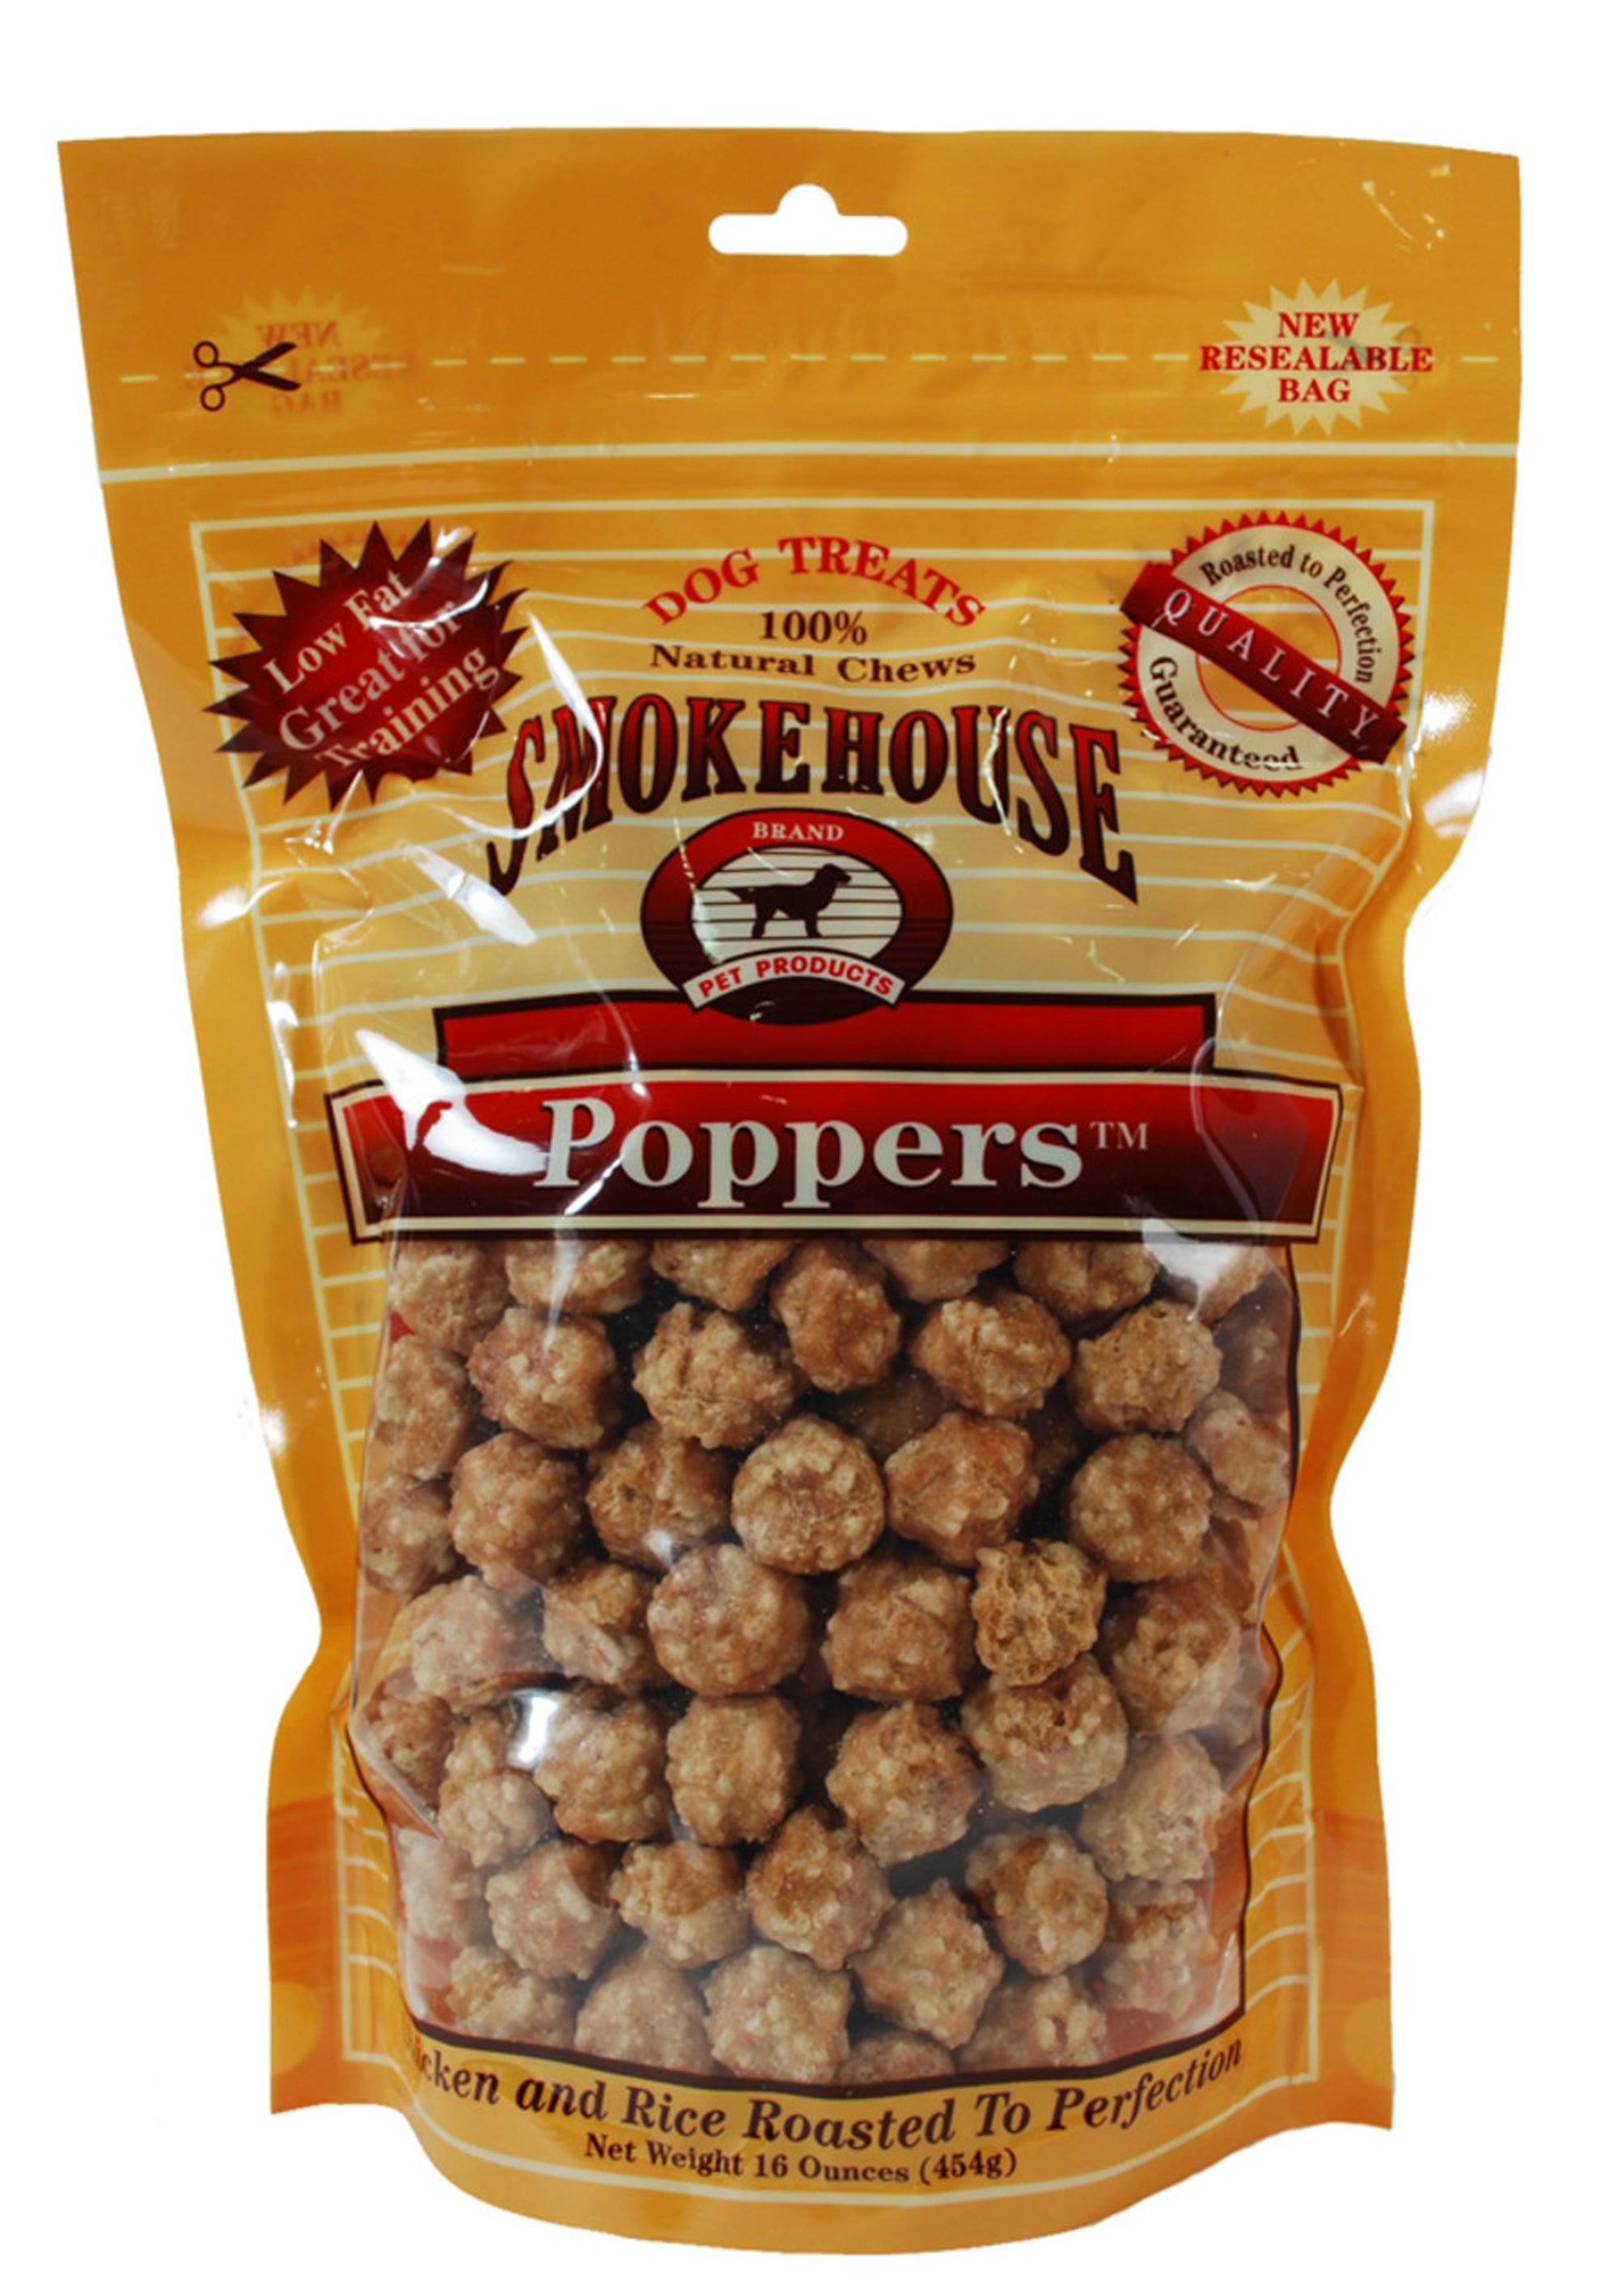 Smokehouse Chicken Poppers Dog Treat 16 oz